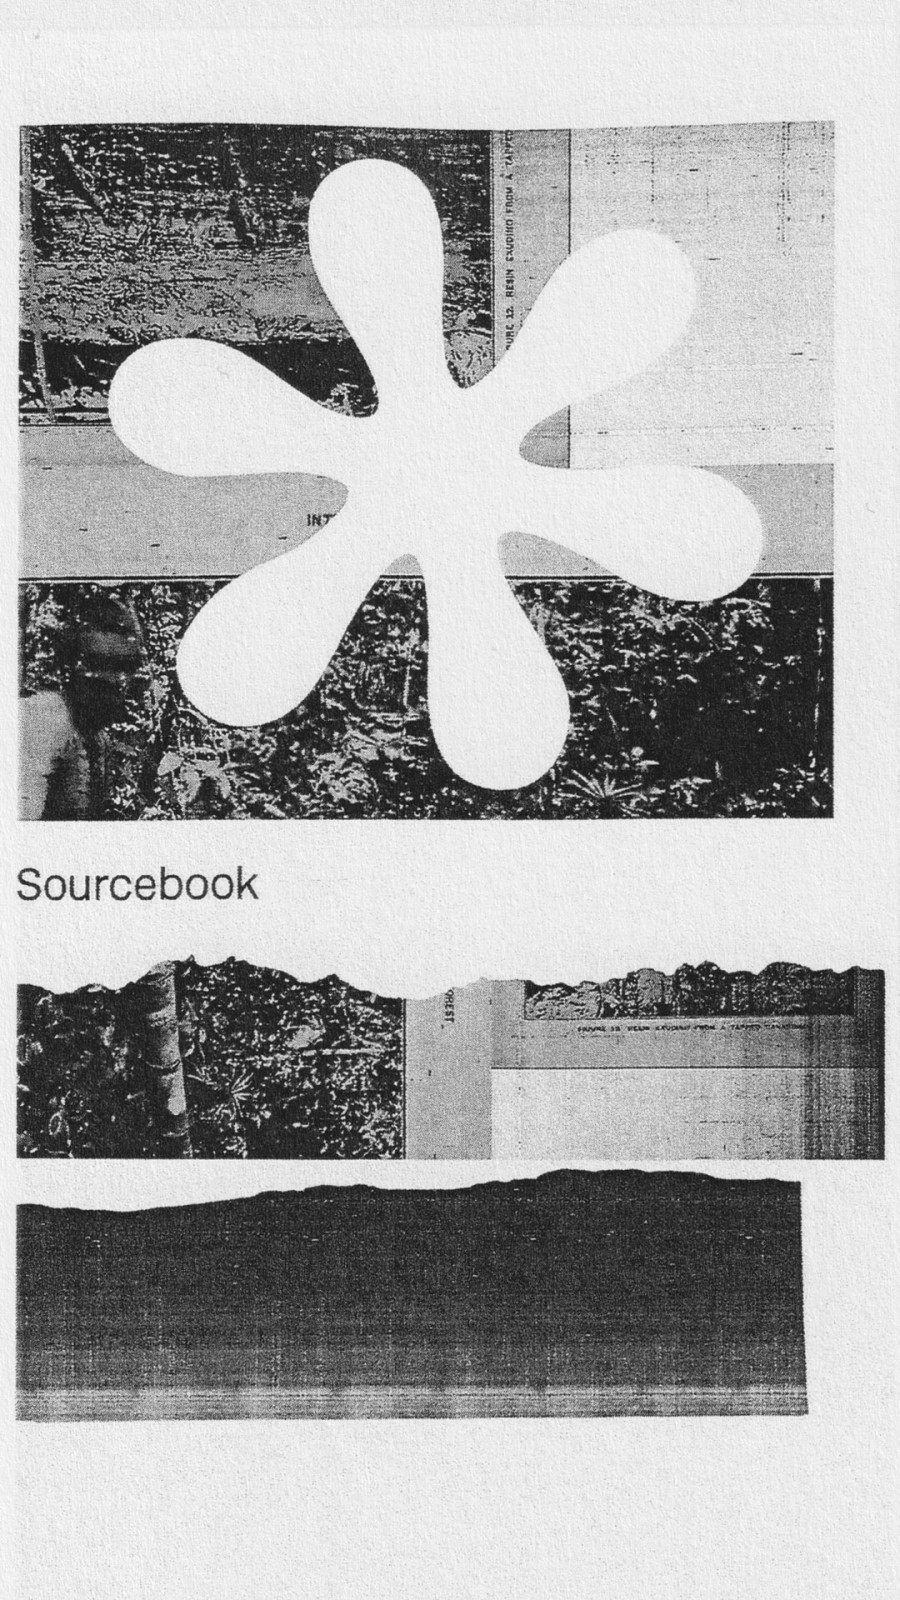 *Sourcebook*, *Collecting Otherwise*, Architectuur Dichterbij, Het Nieuwe Instituut, Rotterdam, 2022